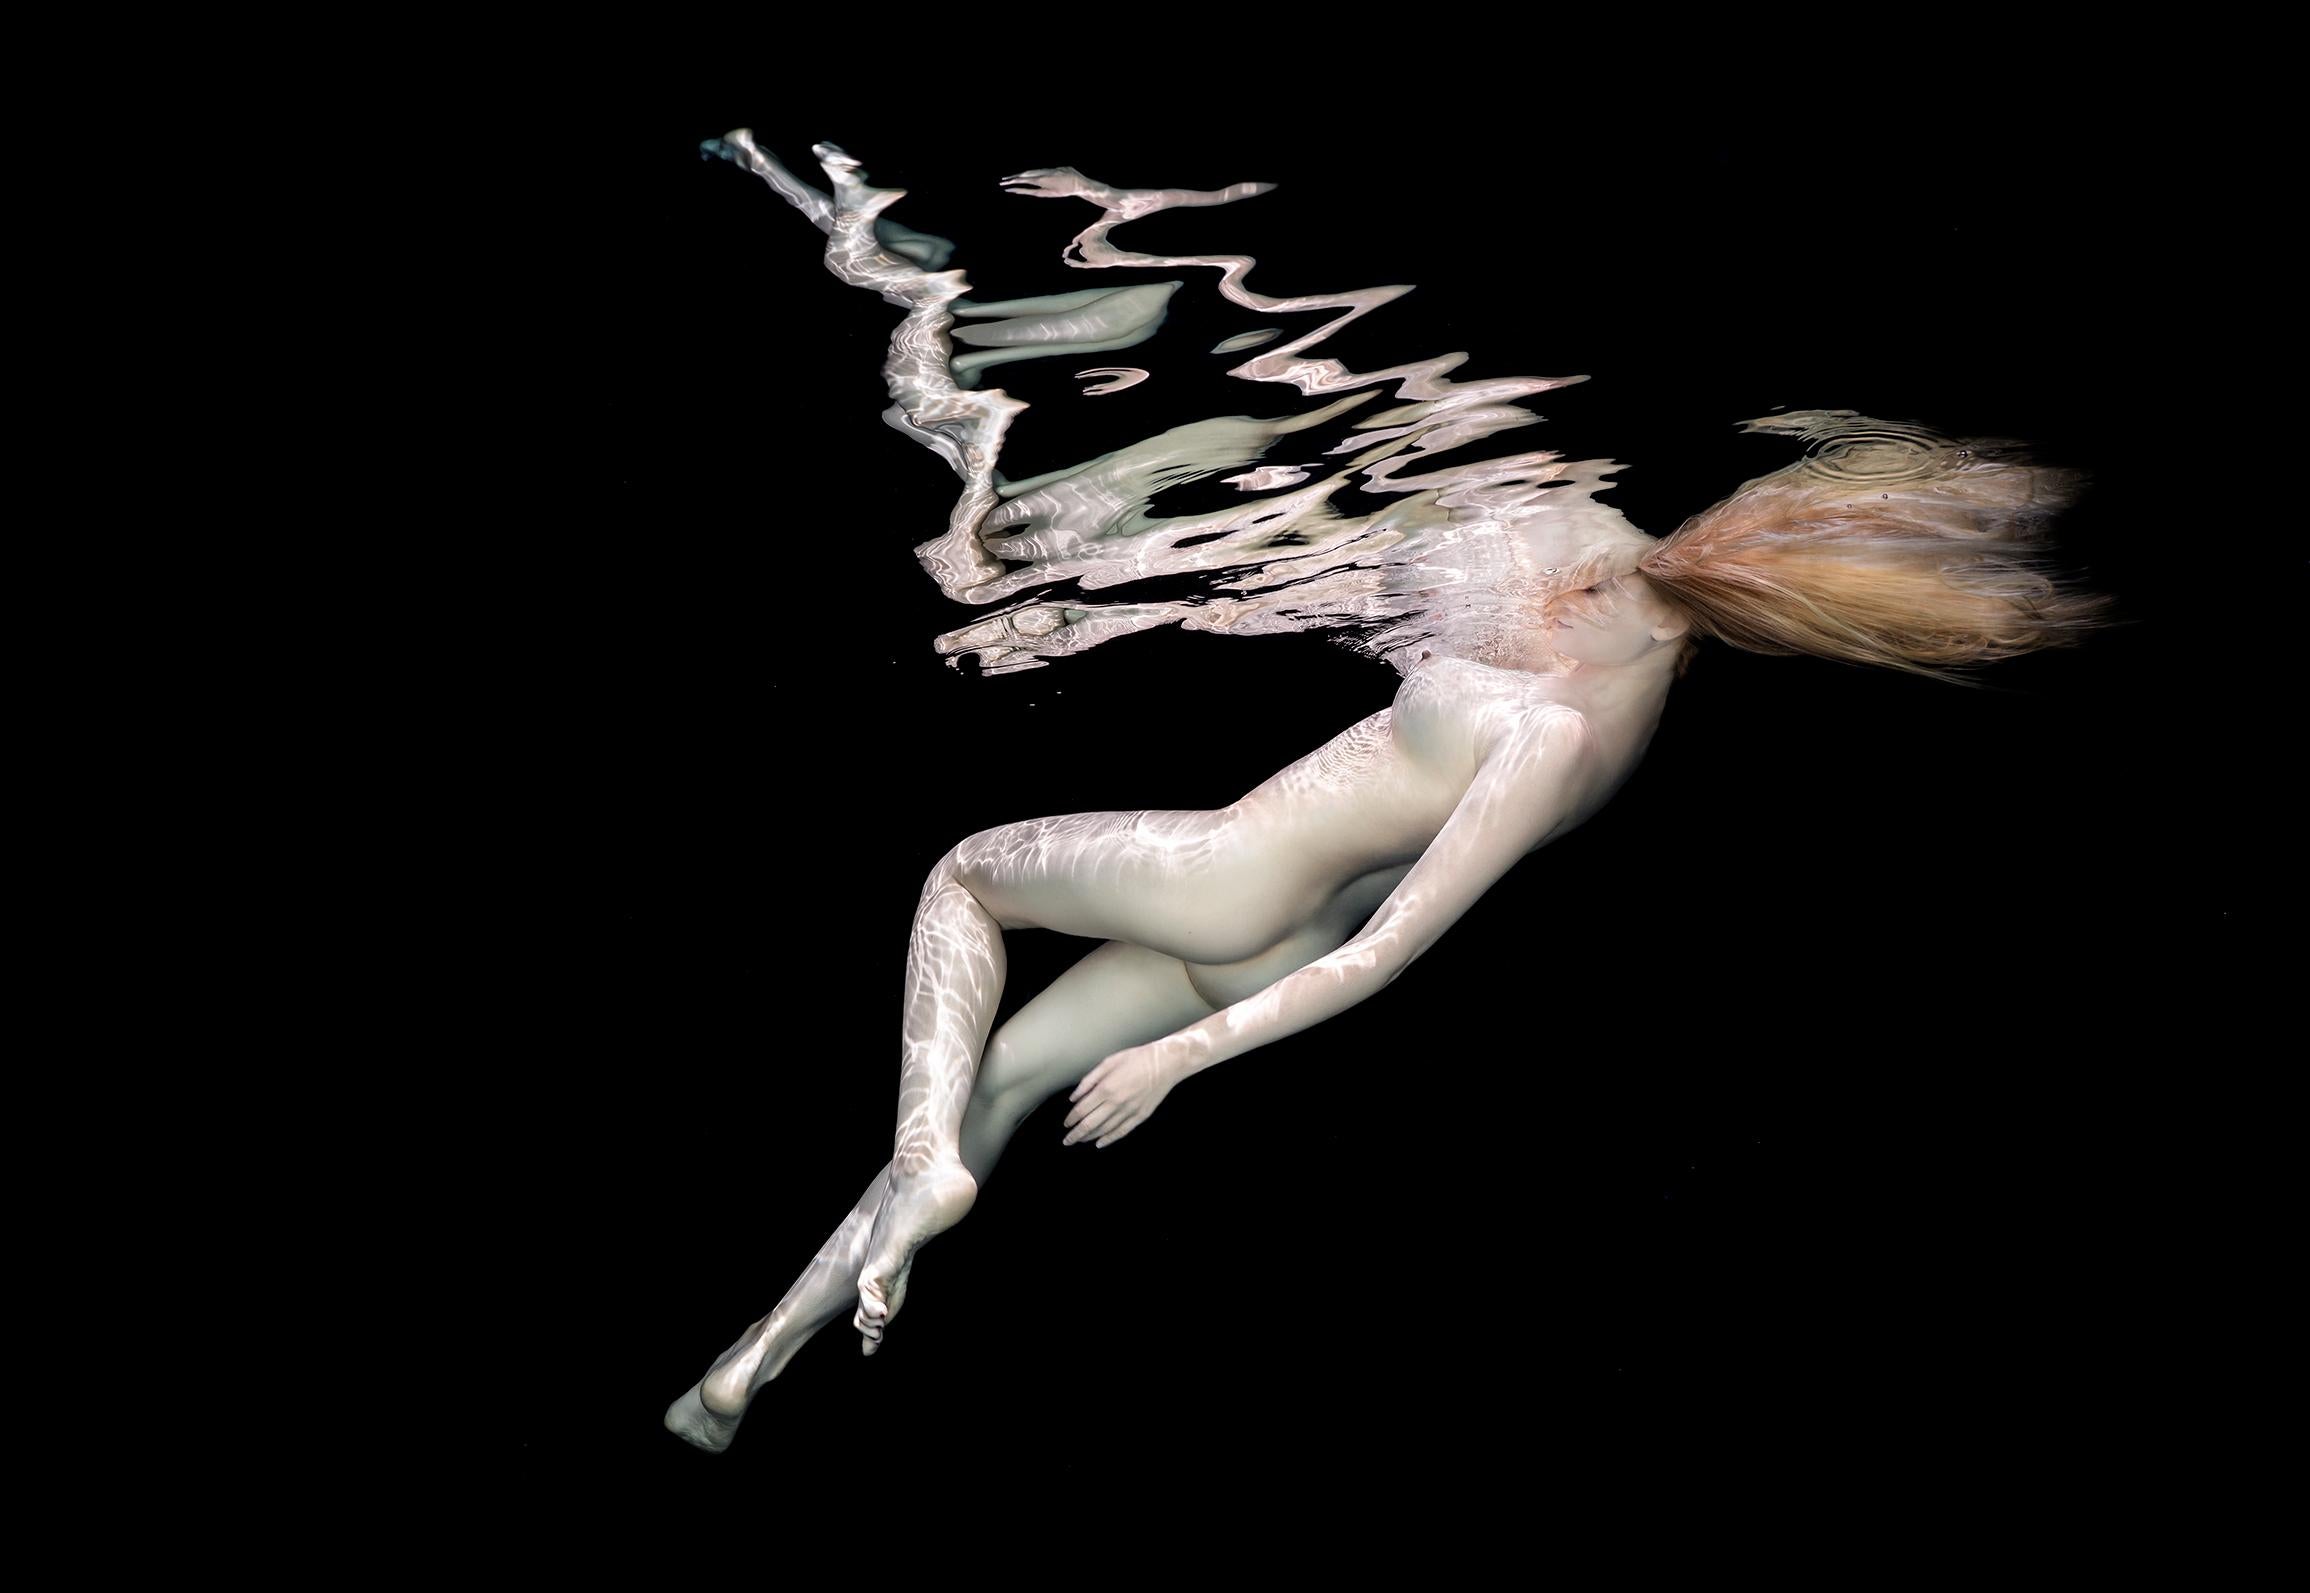 Alex Sher Figurative Photograph - Porcelain III  - underwater nude photograph - print on paper 18х24"